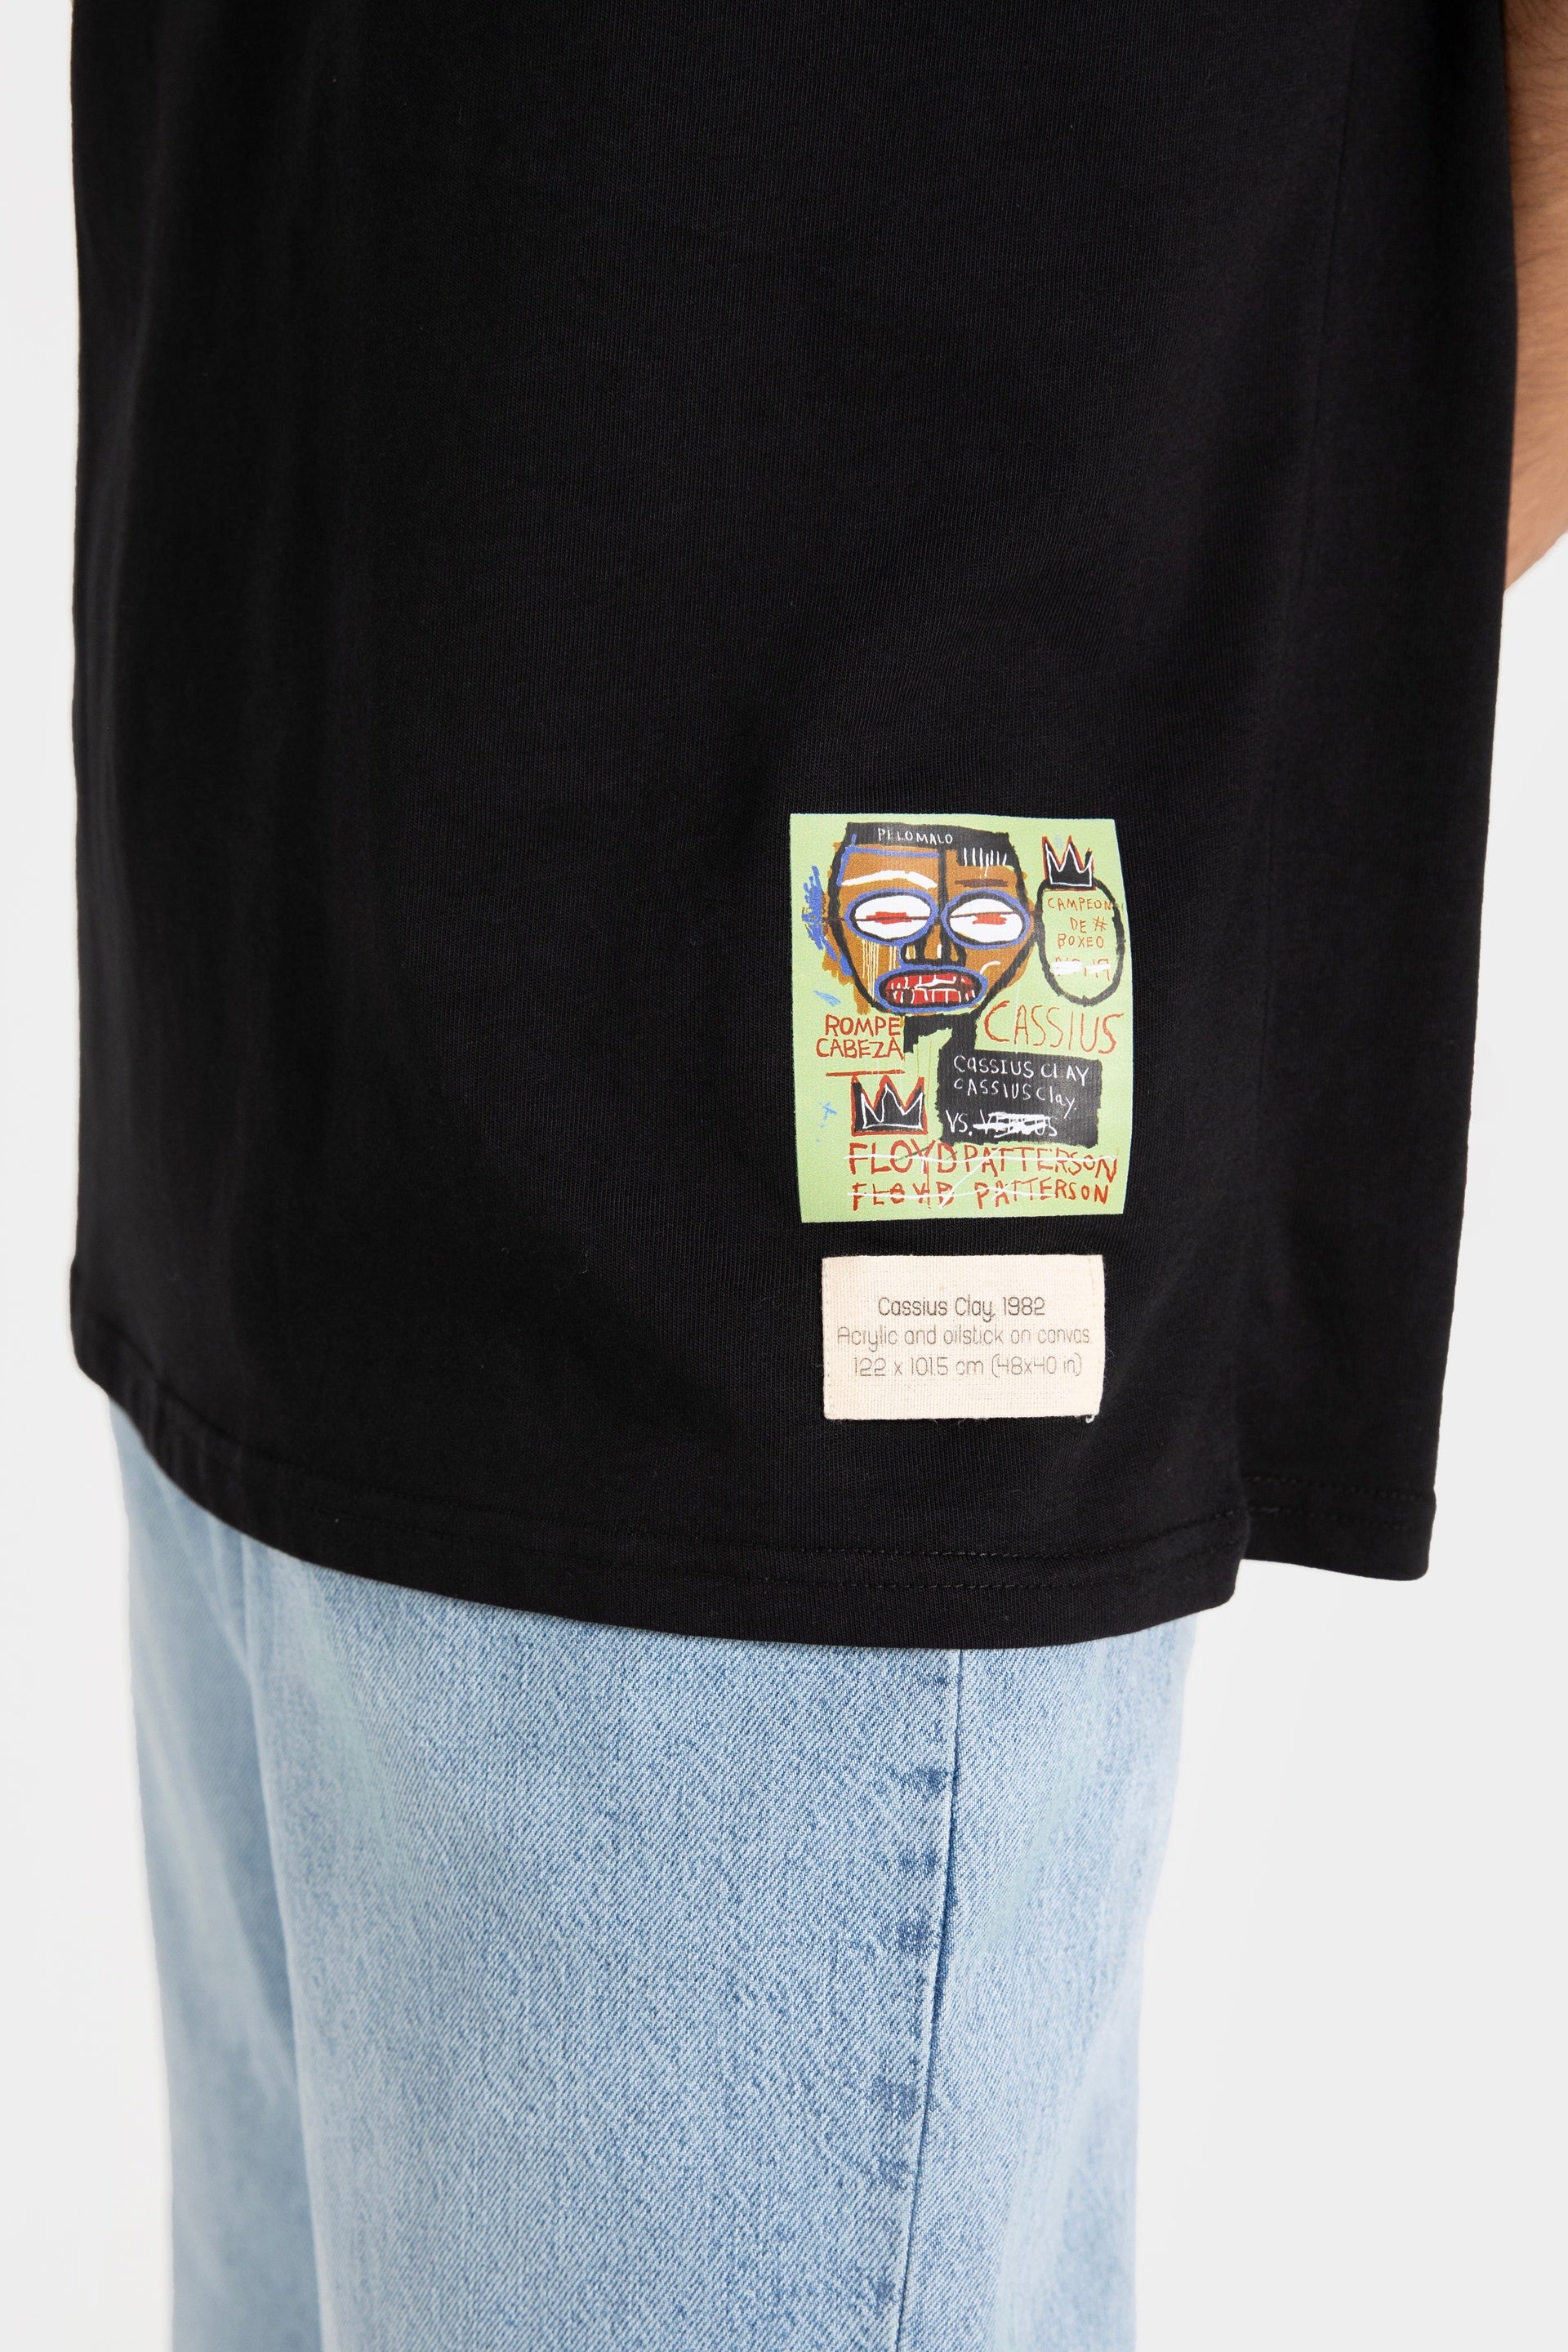 Basquiat graphic t-shirt